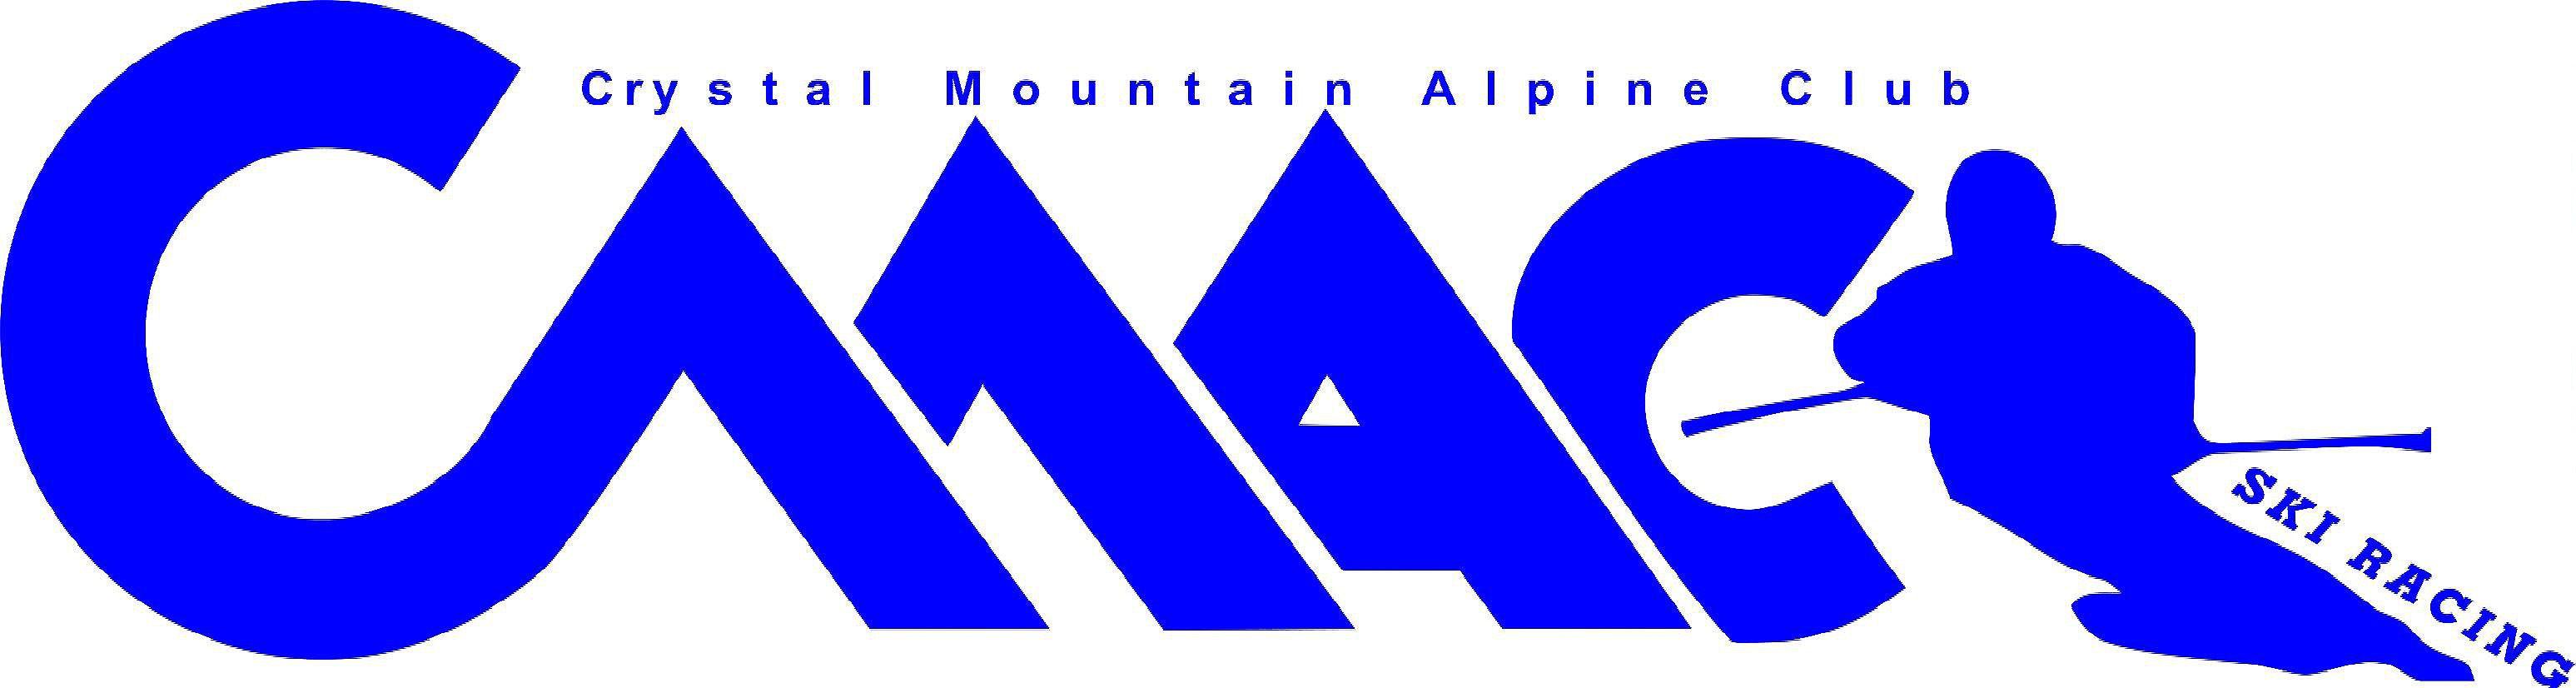 Crystal Mountain Logo - Crystal Mountain Alpine Club (CMAC) Hats Hoodies Shirts Etc